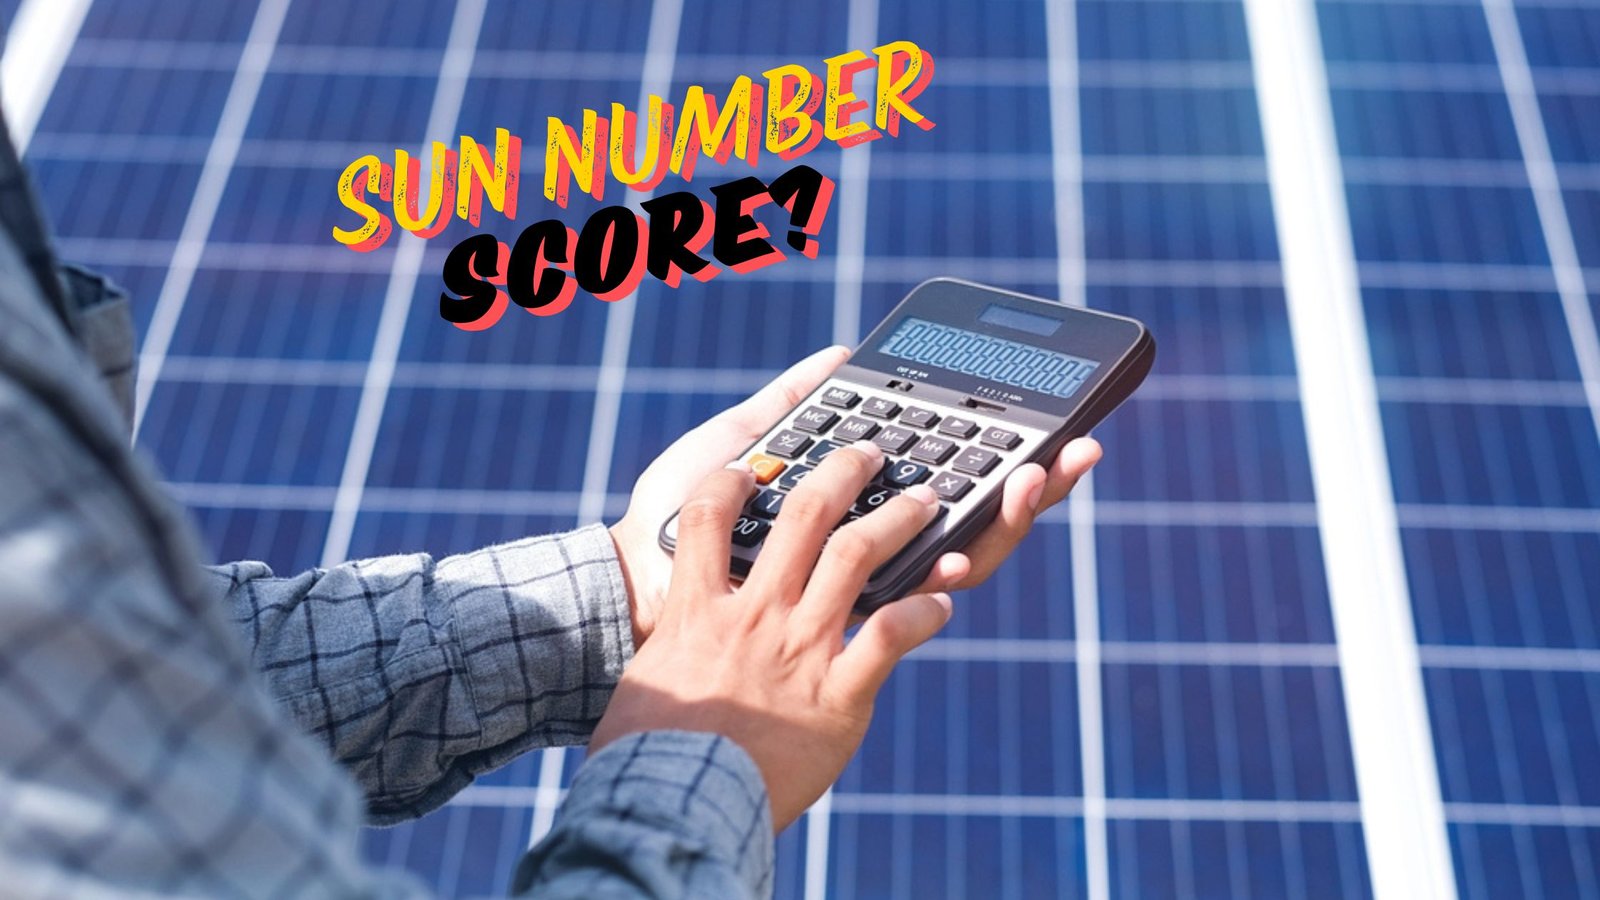 calculating sun number score